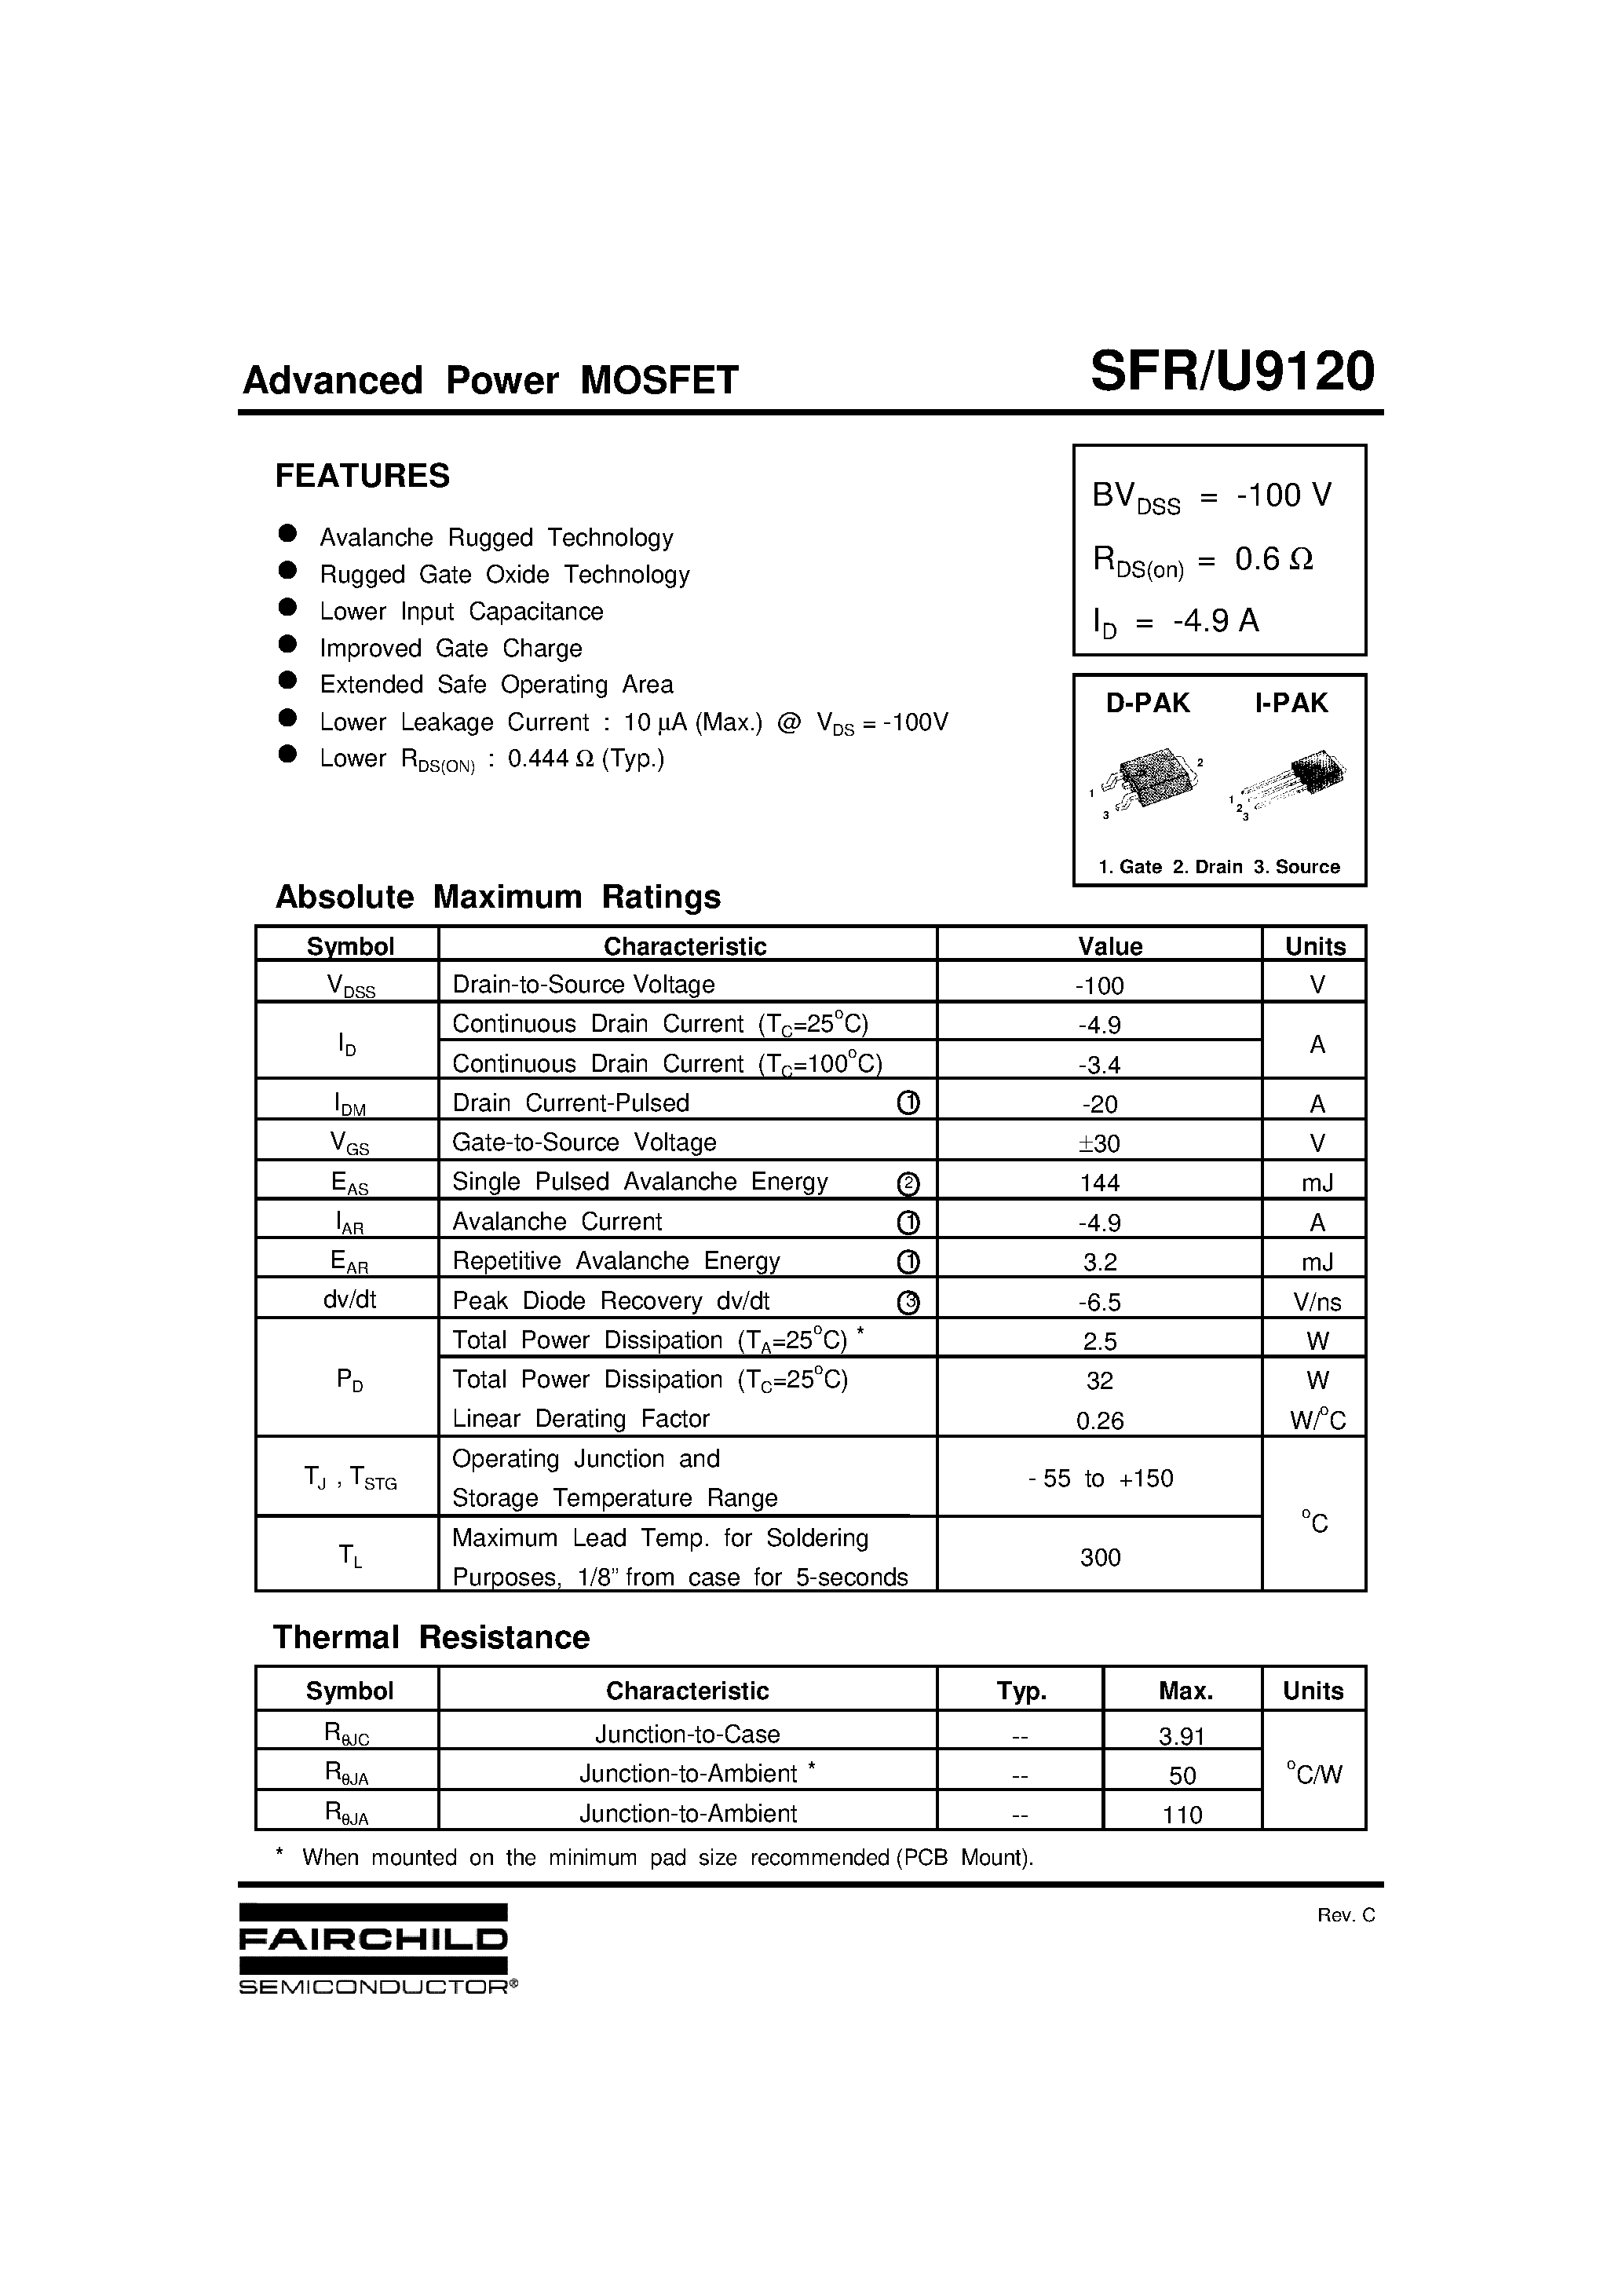 Datasheet SFR9120 - Advanced Power MOSFET page 1